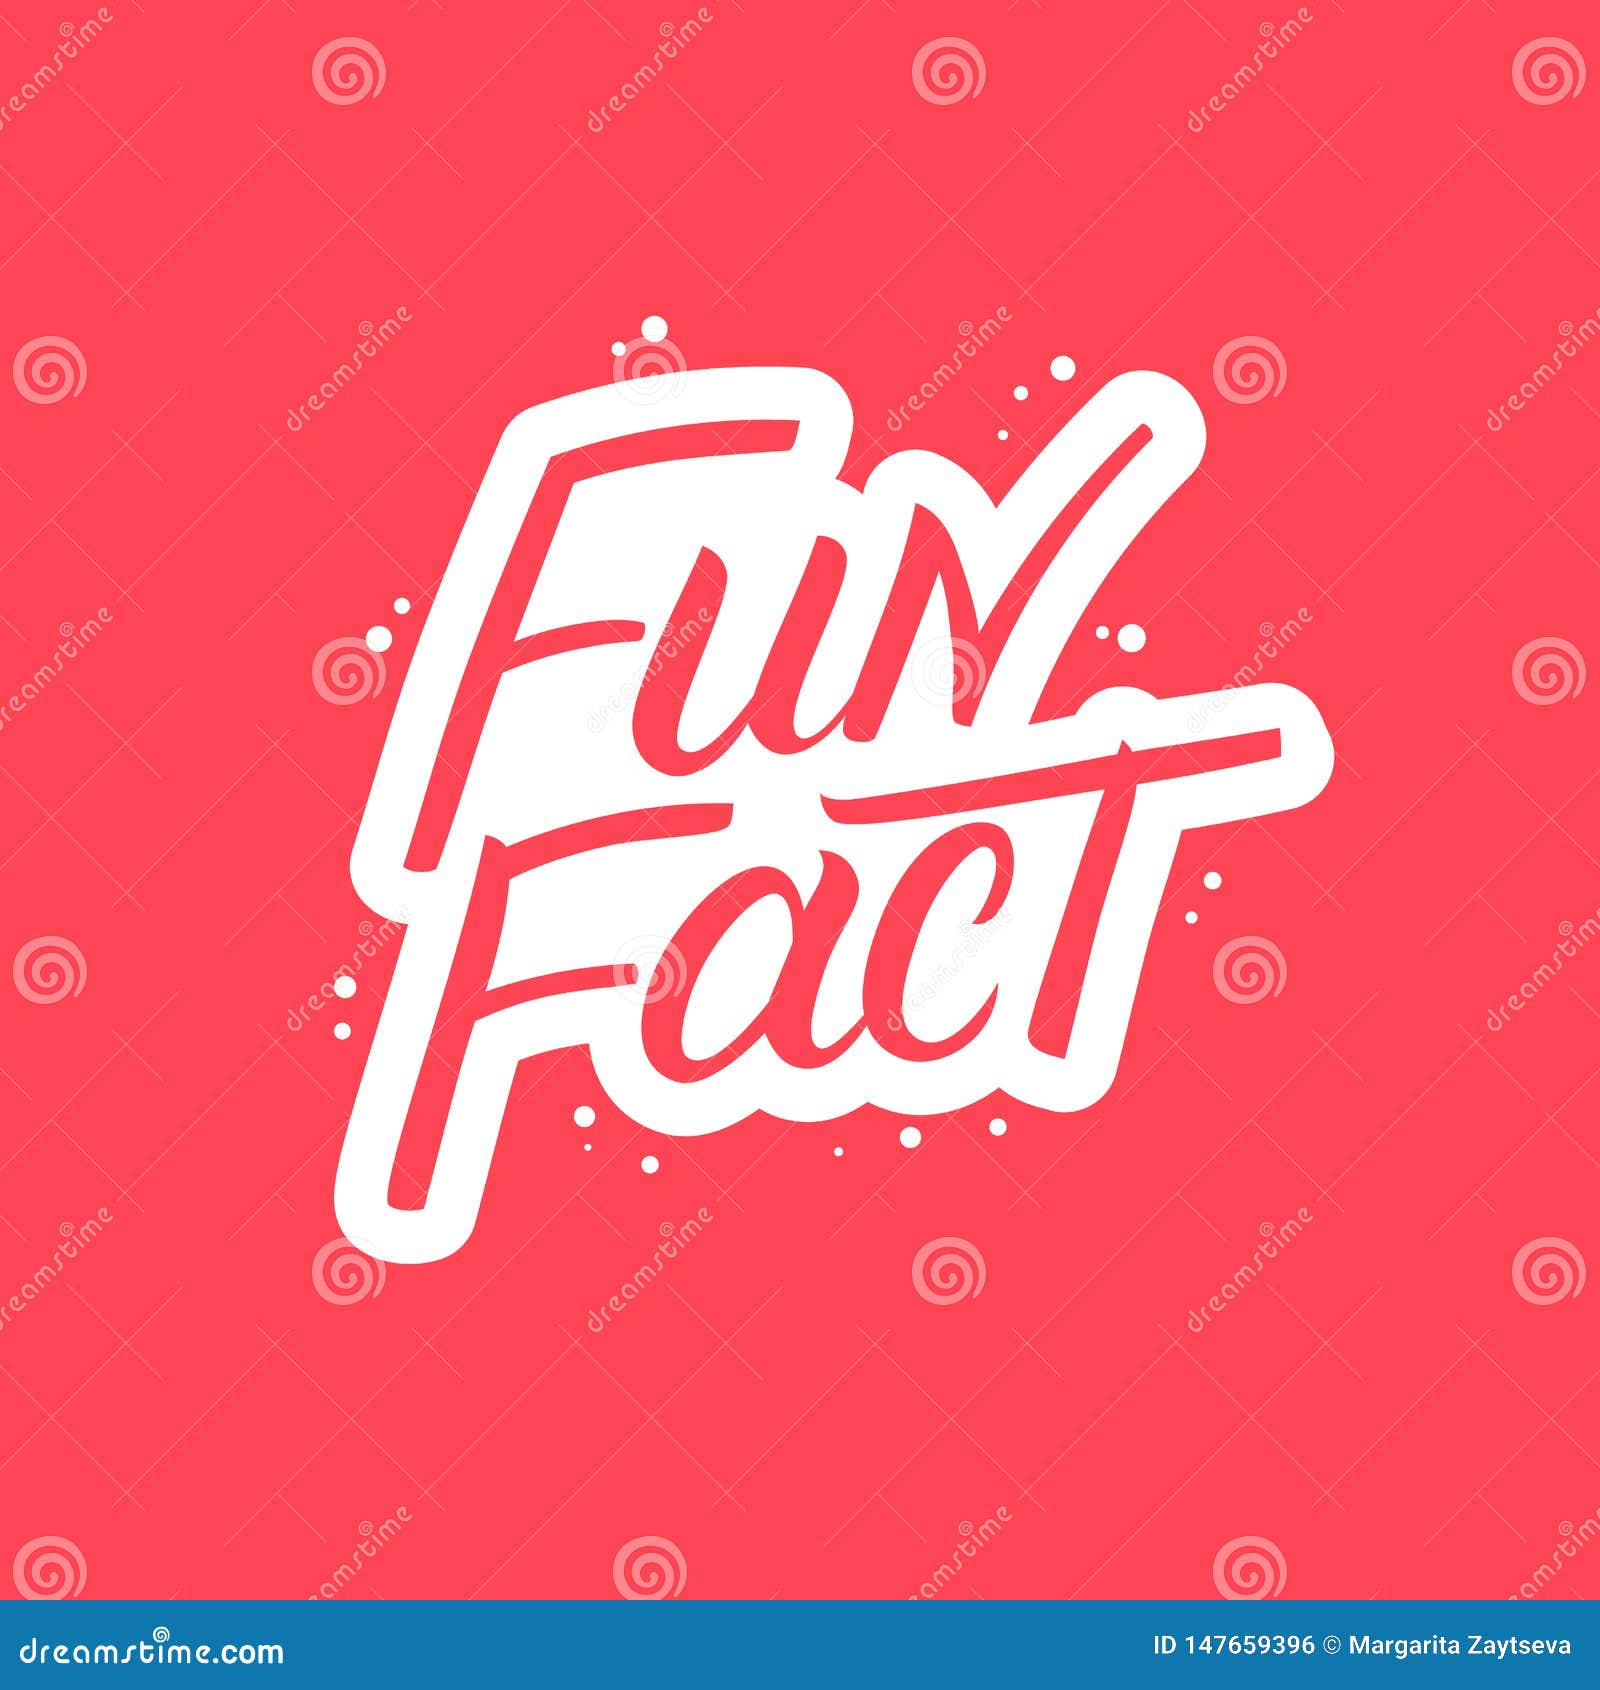 Fun facts icon stockfoton – 2 844 bilder | Shutterstock